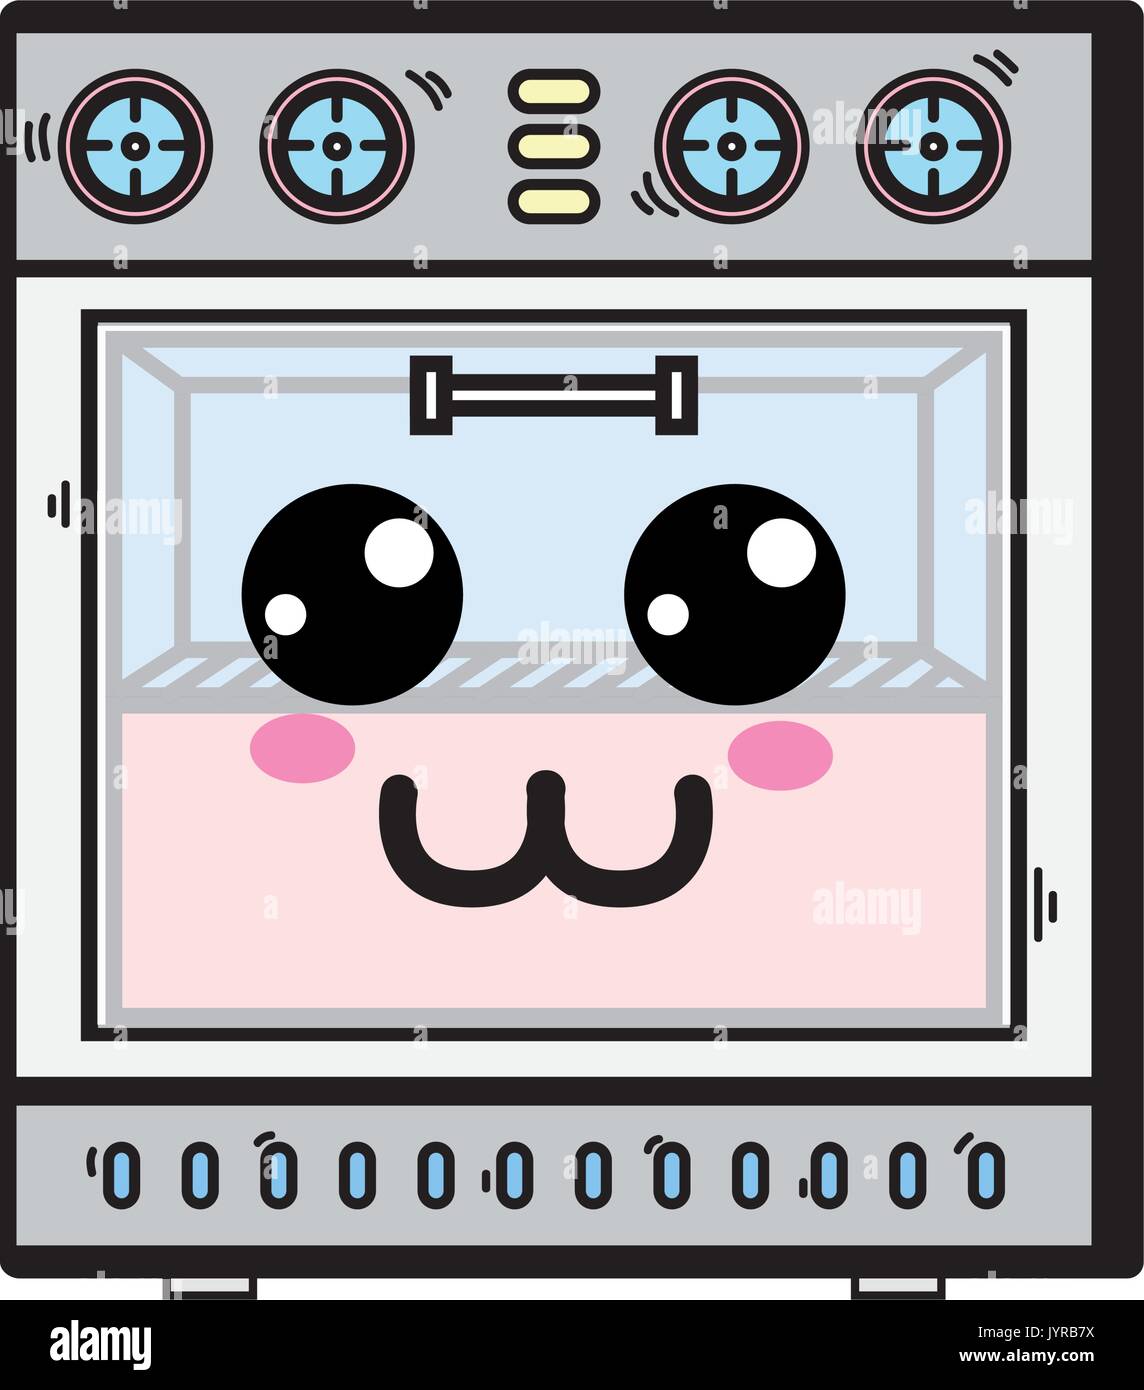 Kawaii Cute Happy Microwaves Technology Stock Illustration